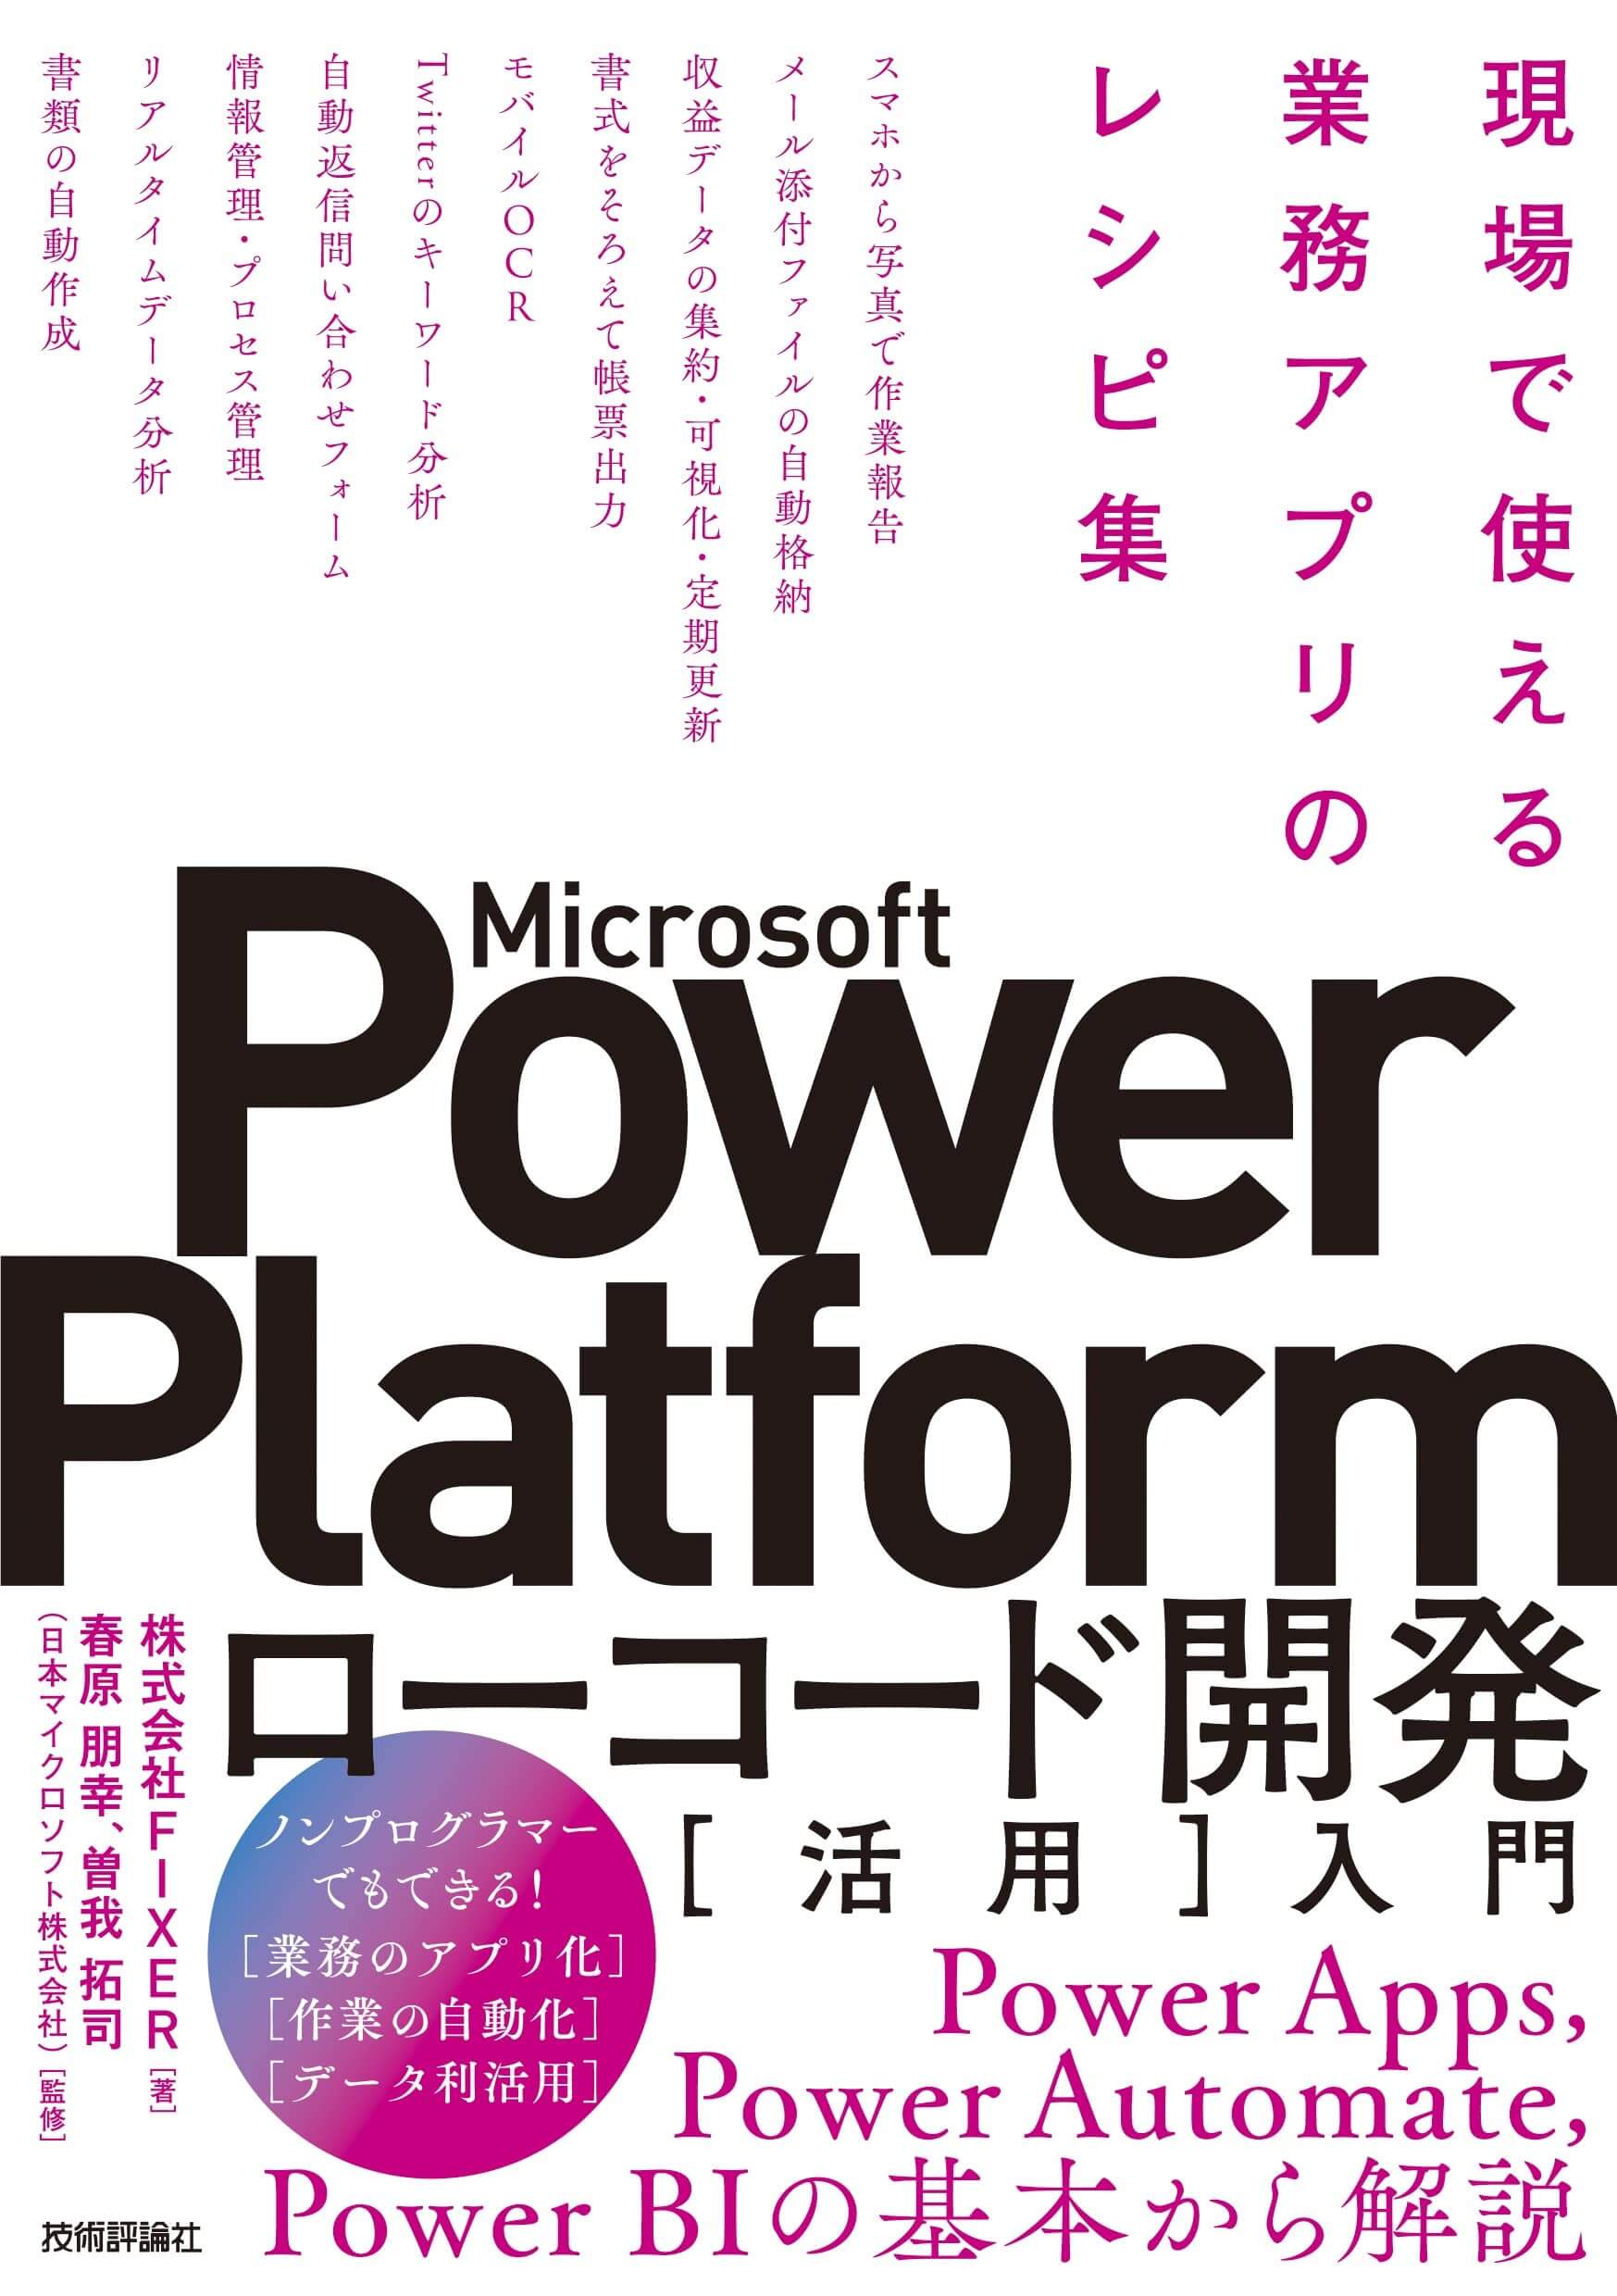 Microsoft Power Platform ローコード開発〔活用〕入門